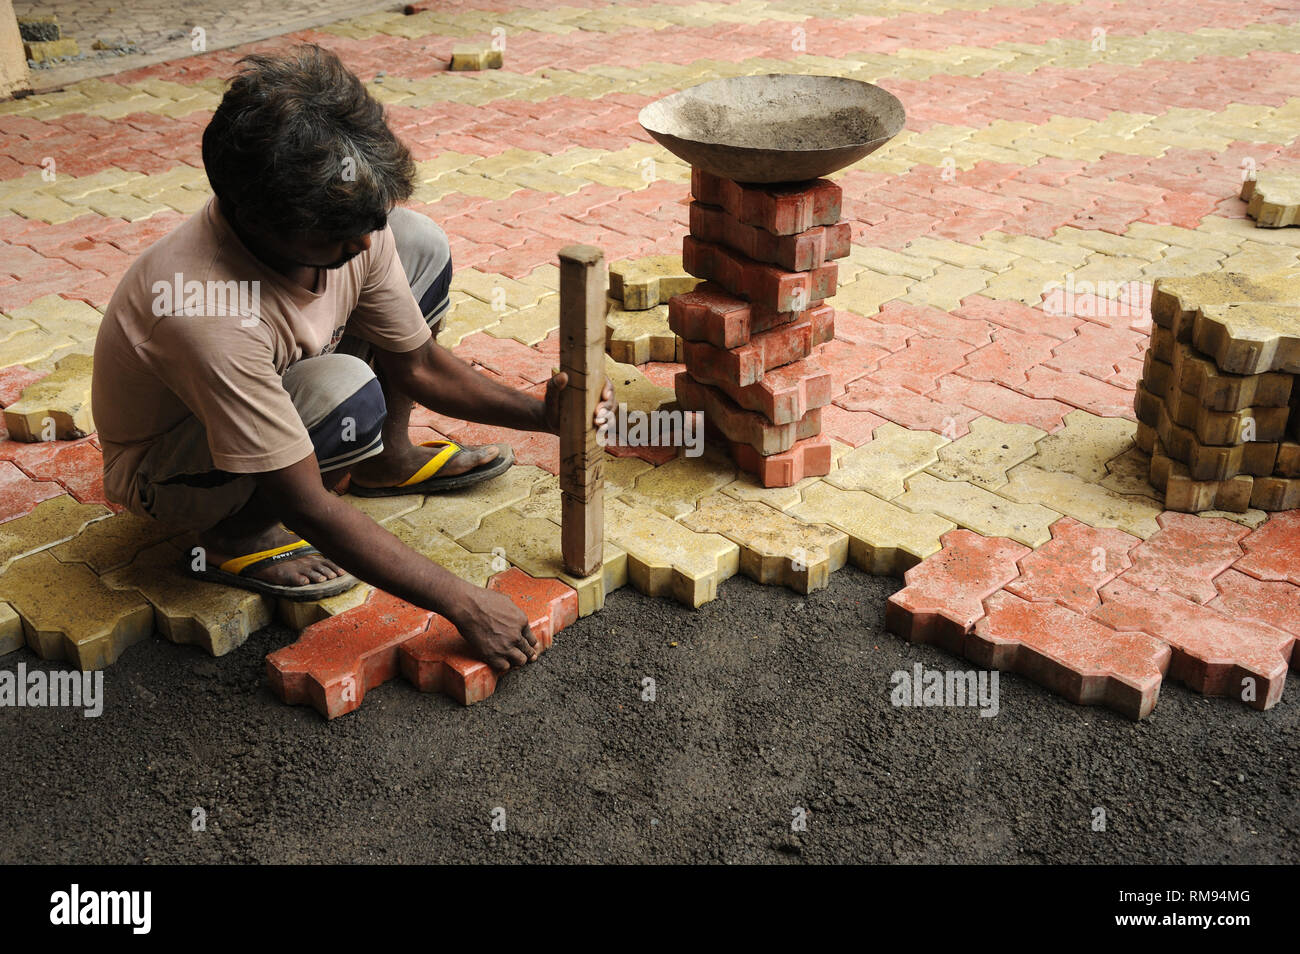 Worker laying interlocking concrete Paver block bricks, India, Asia Stock Photo